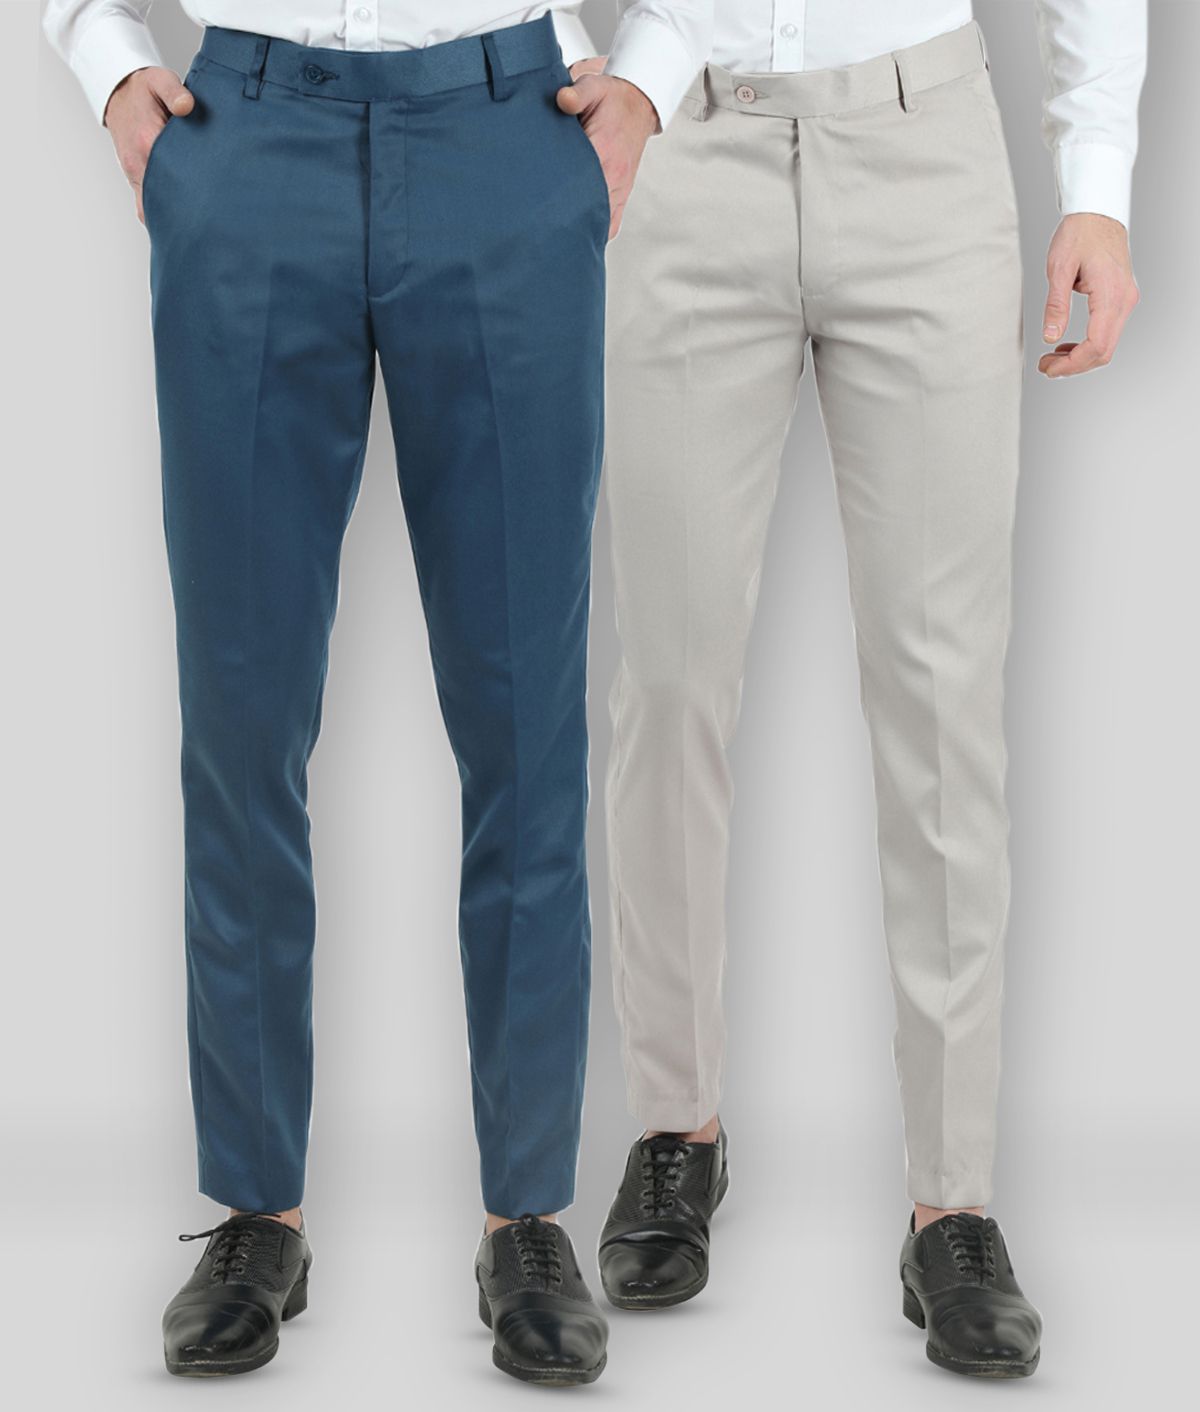     			VEI SASTRE - Multicolor Cotton Blend Slim Fit Men's Formal Pants (Pack of 2)